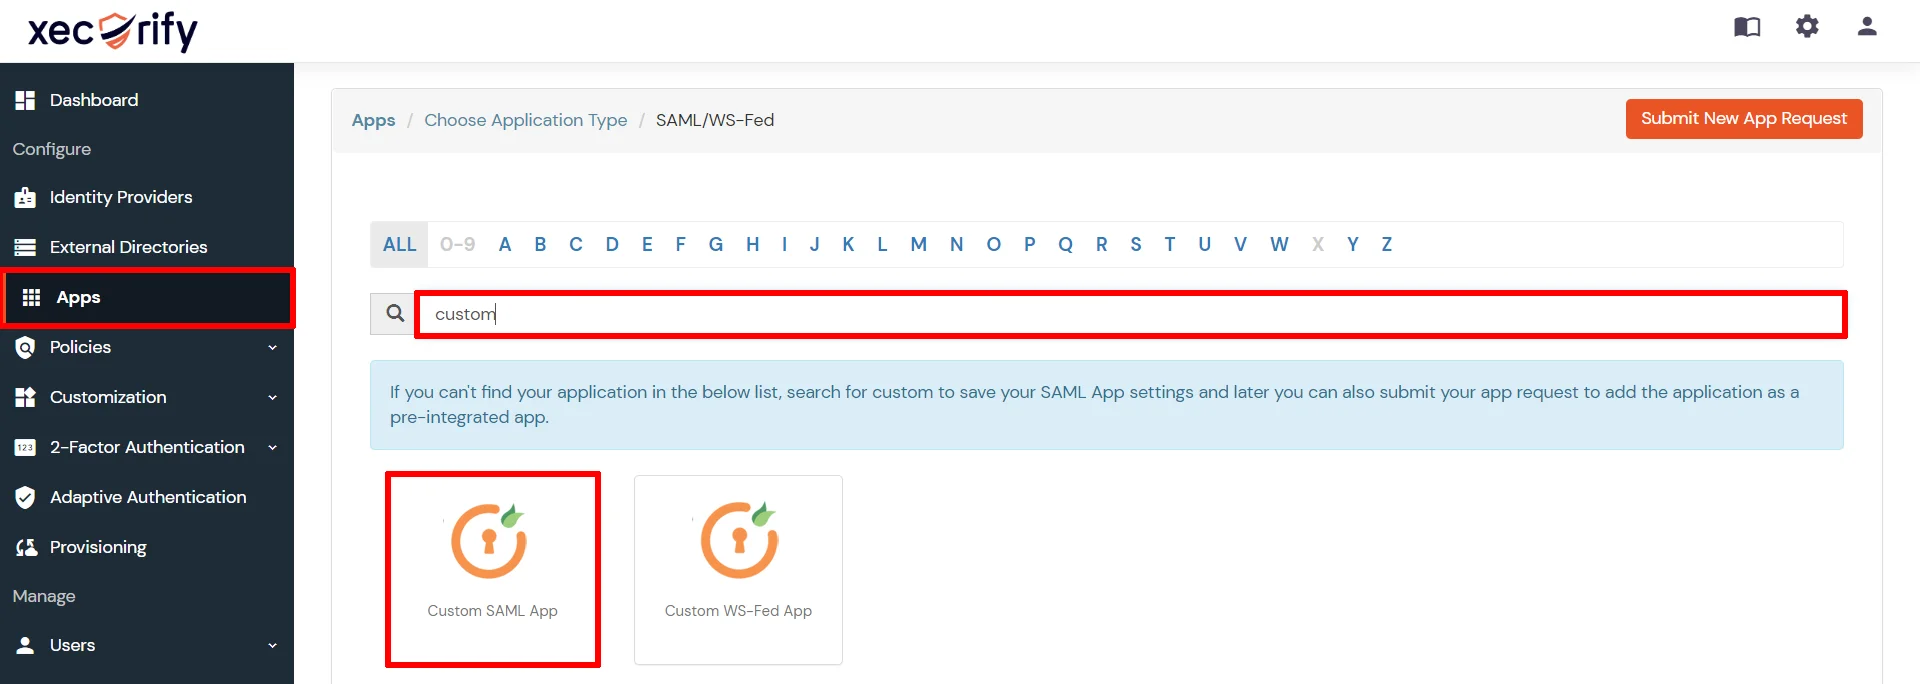 miniorange Shopify SSO - login with miniorange shopify search custom saml application